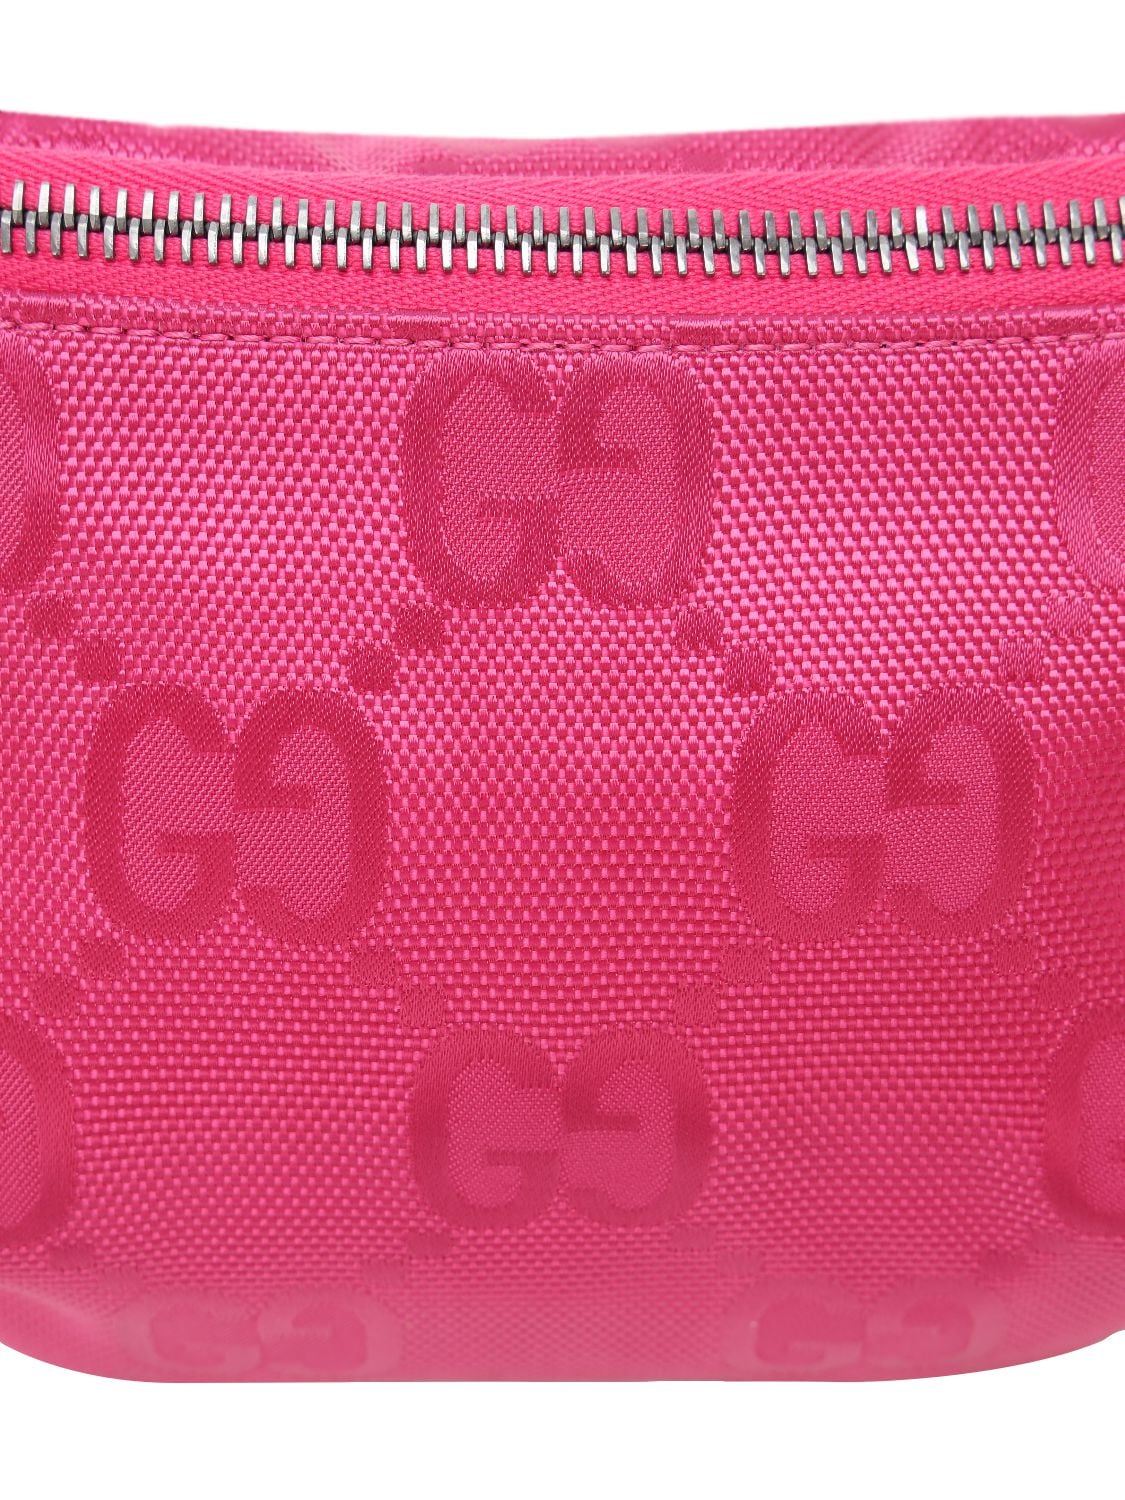 GUCCI: belt bag in GG Supreme nylon - Fuchsia